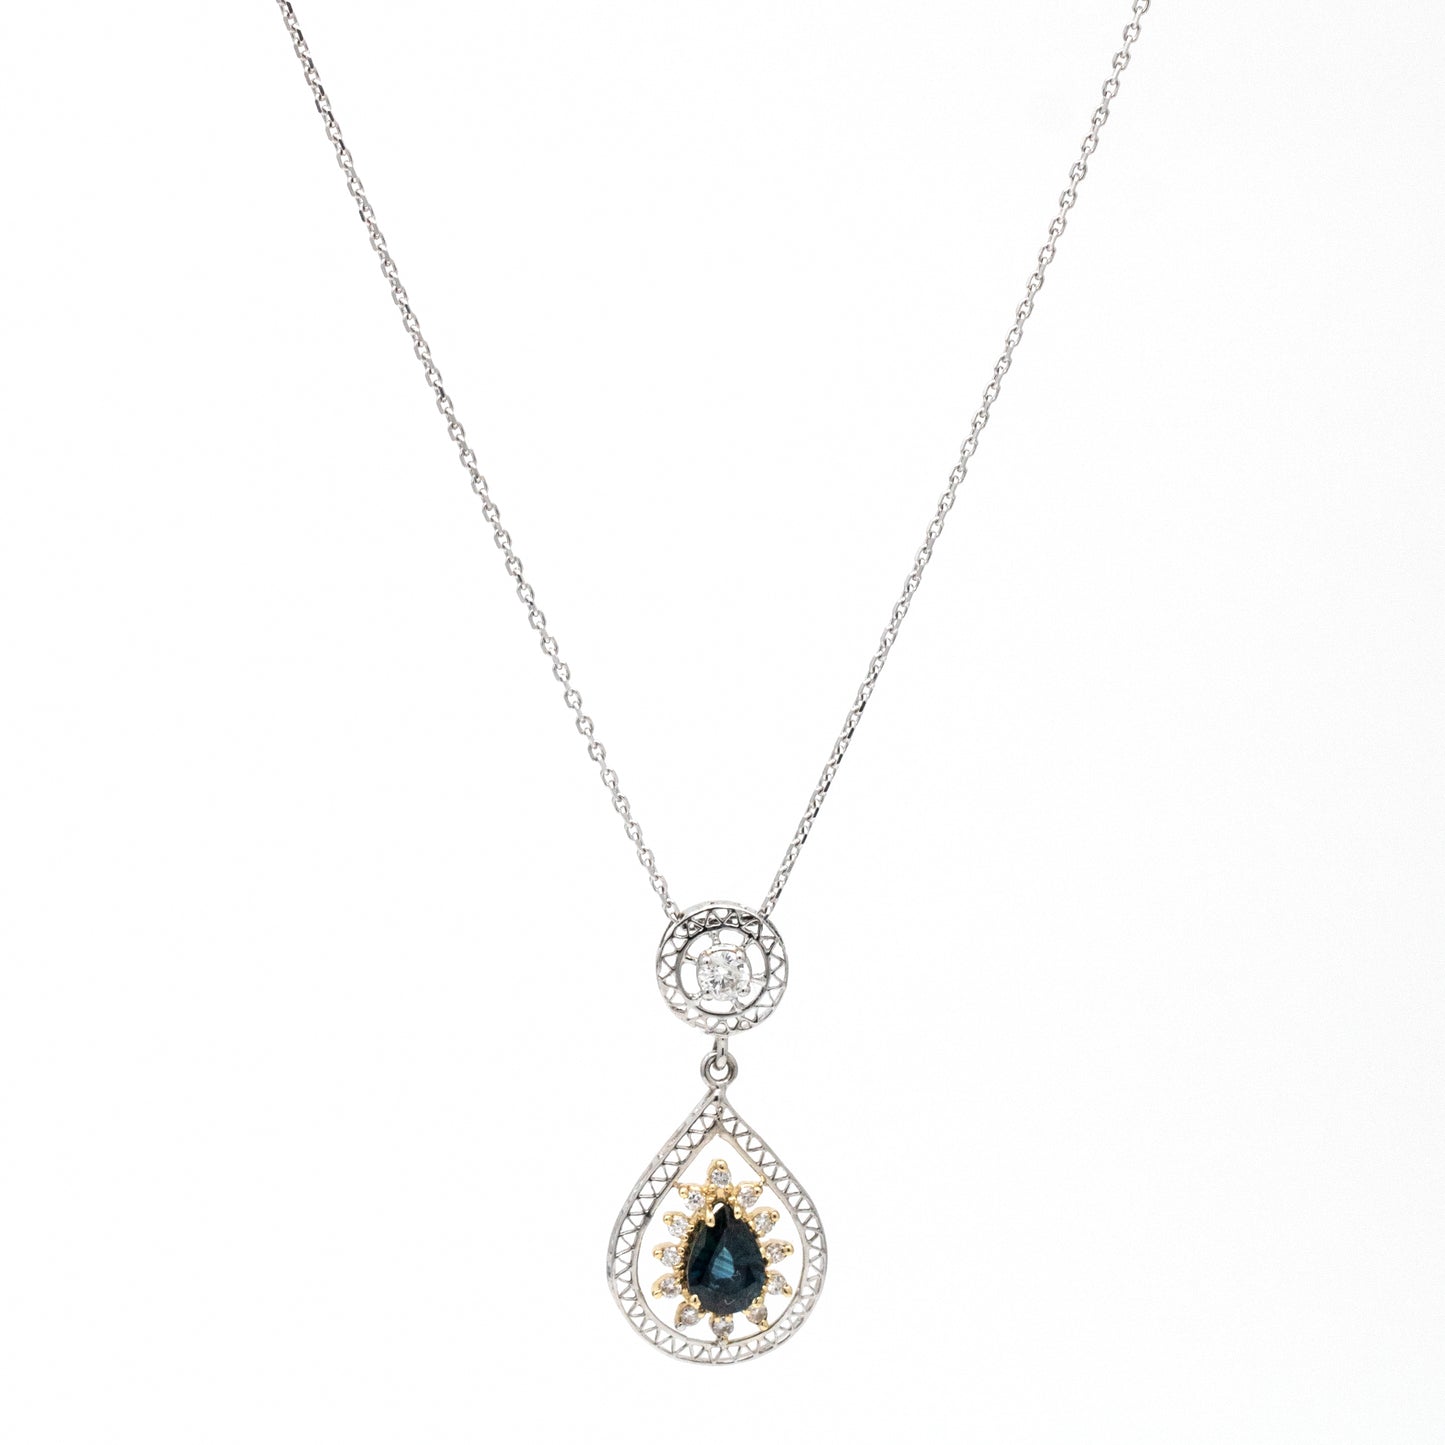 Stunning Women's 14k White Gold Diamond Blue Sapphire Dangle Pendant Necklace